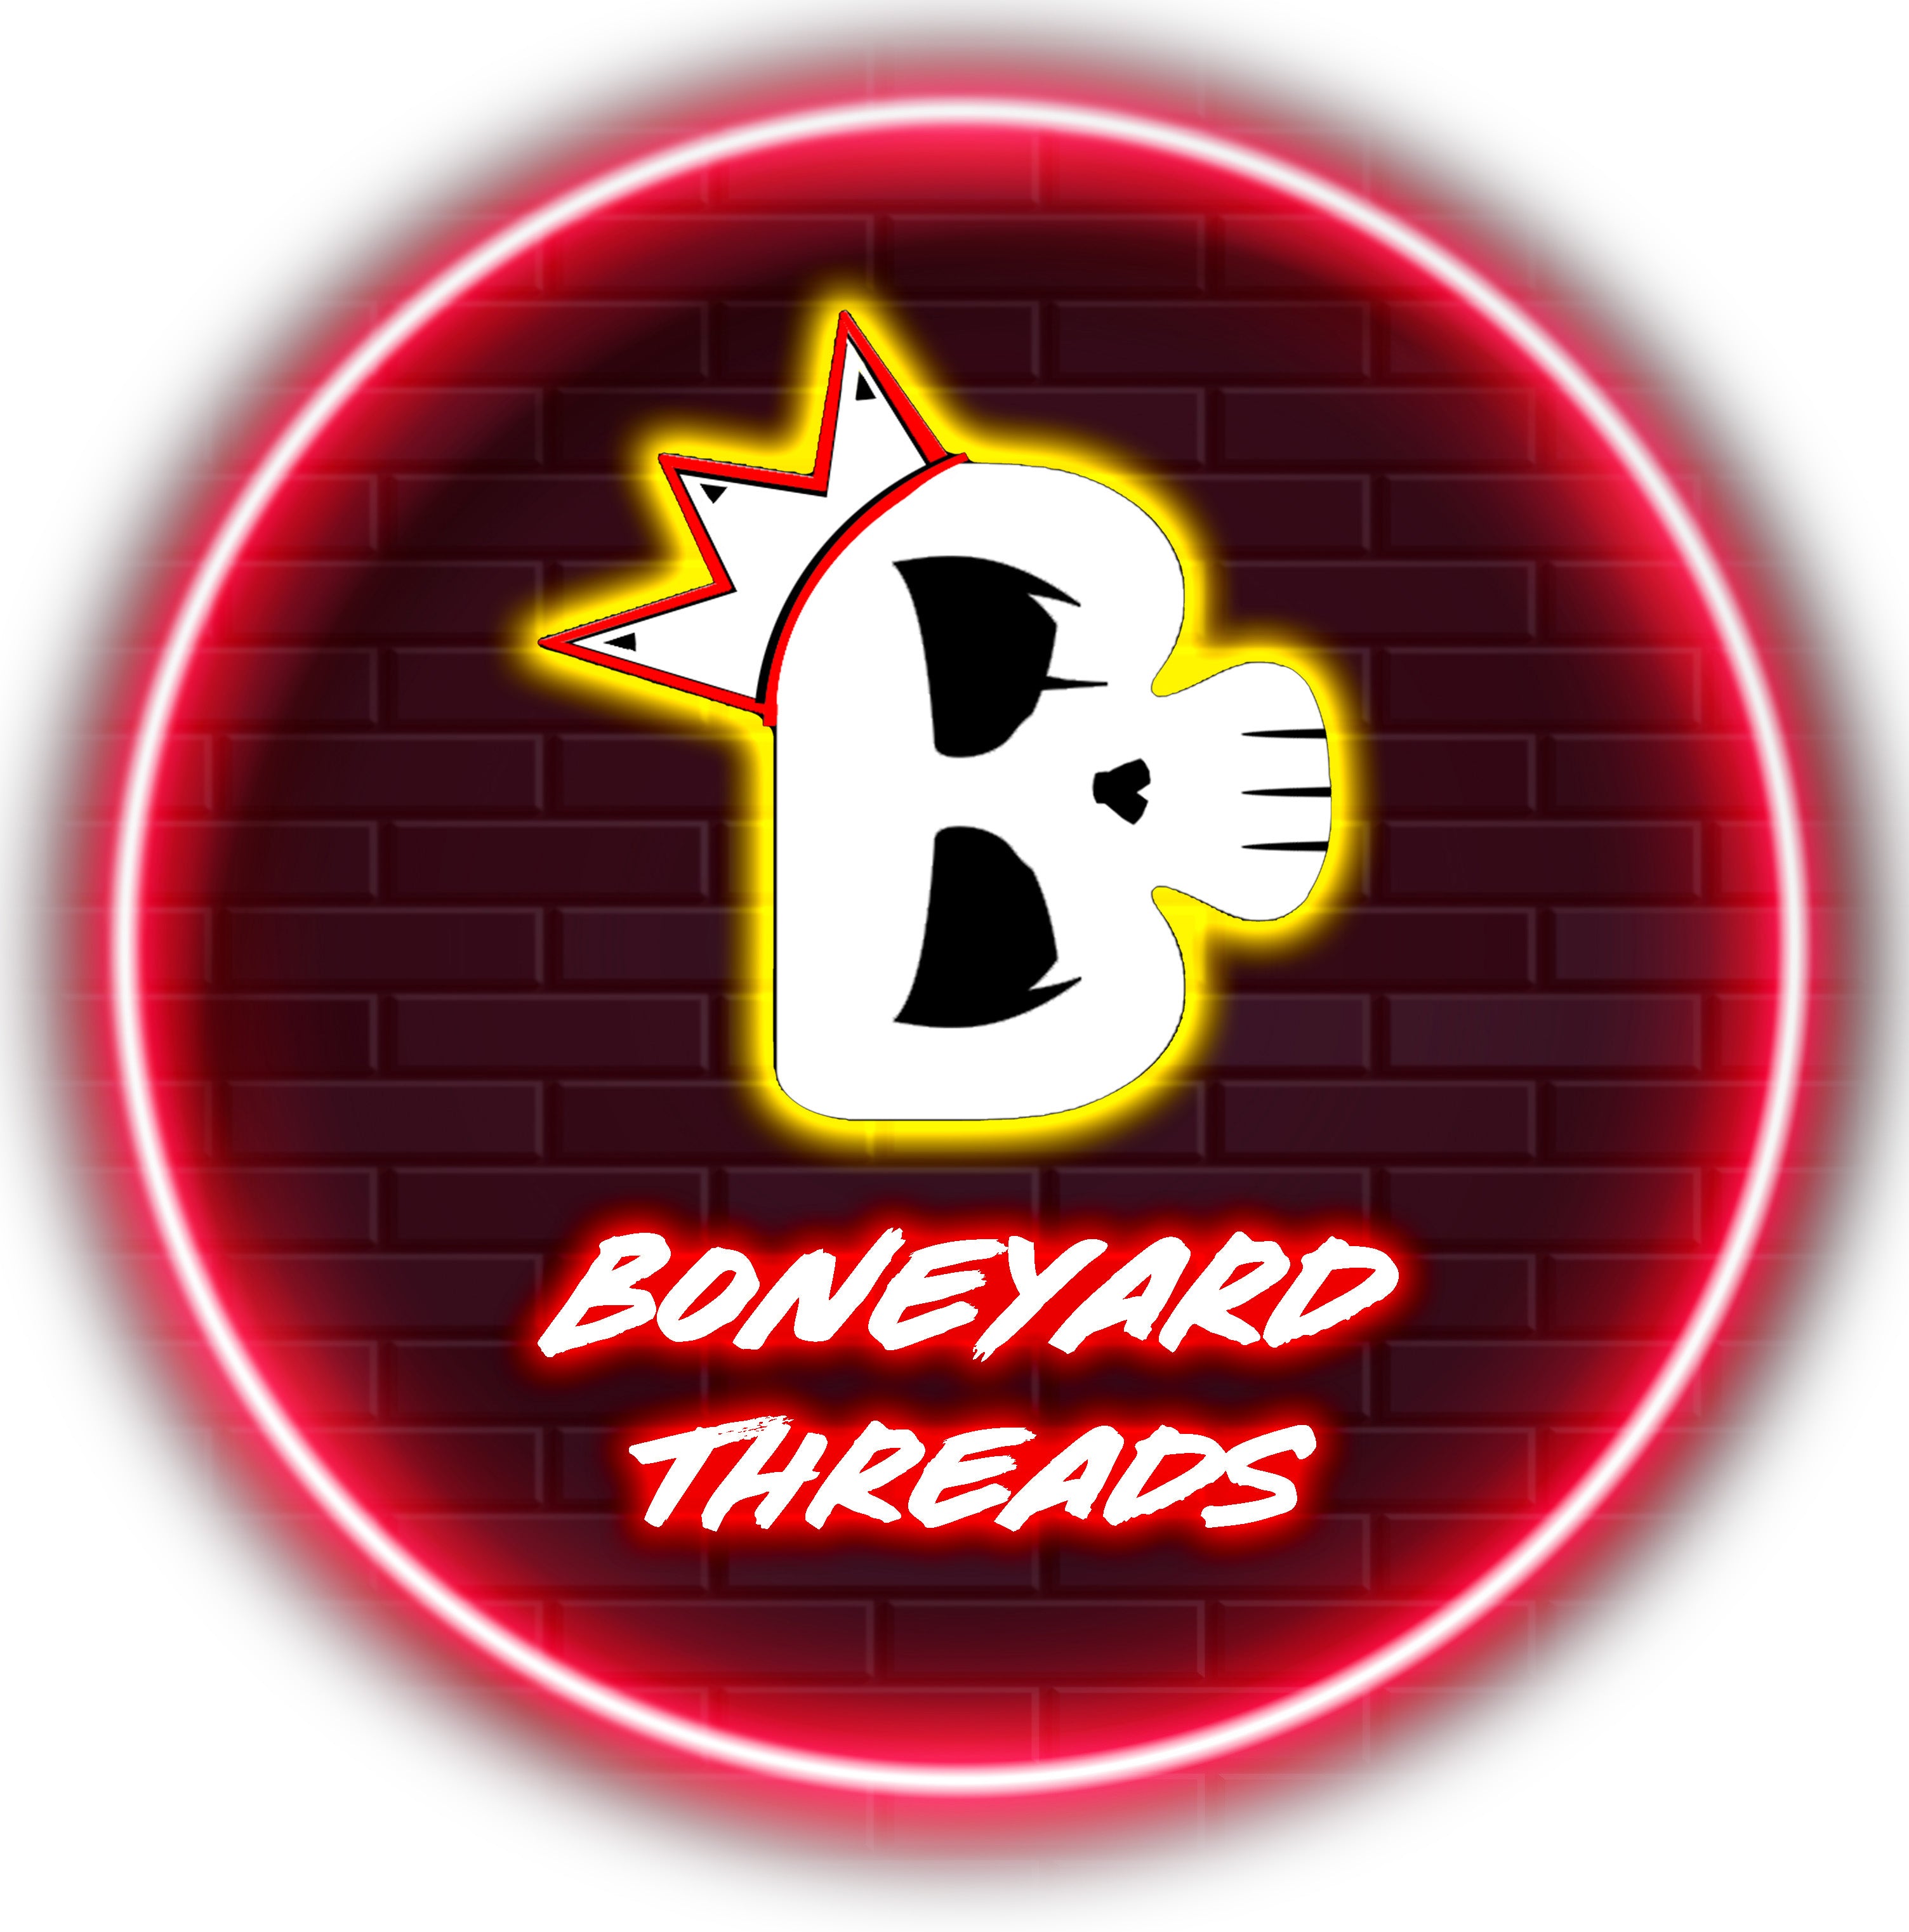 Boneyard Threads